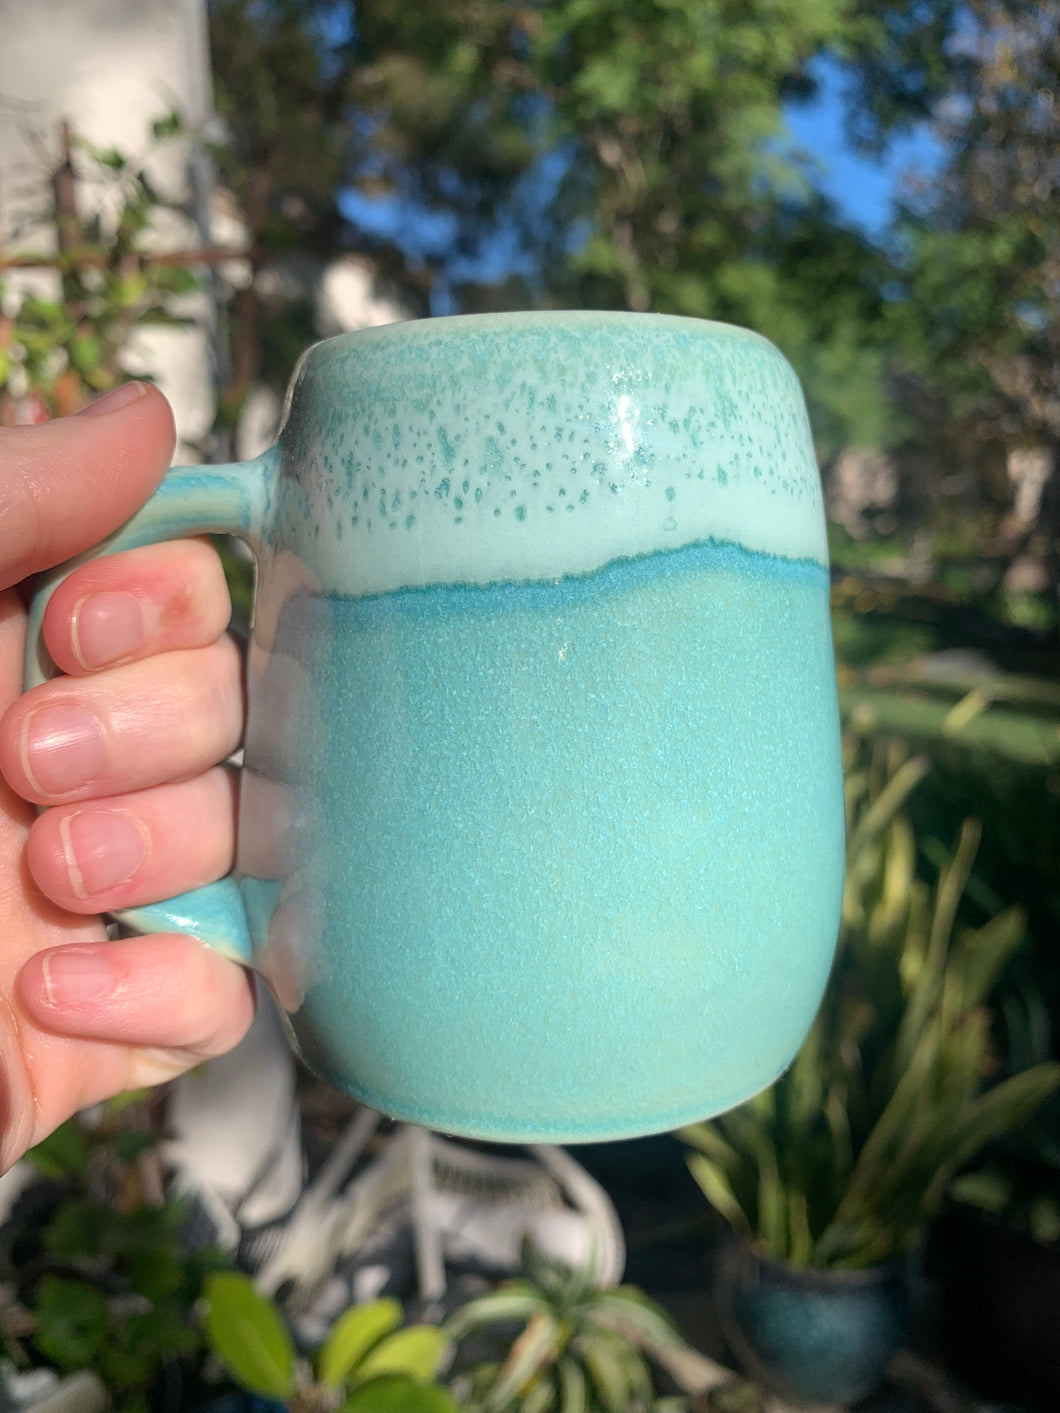 'Jade' with 'Milk Froth' Rim - Tiny Ceramic Tea Cup Small Coffee Mug